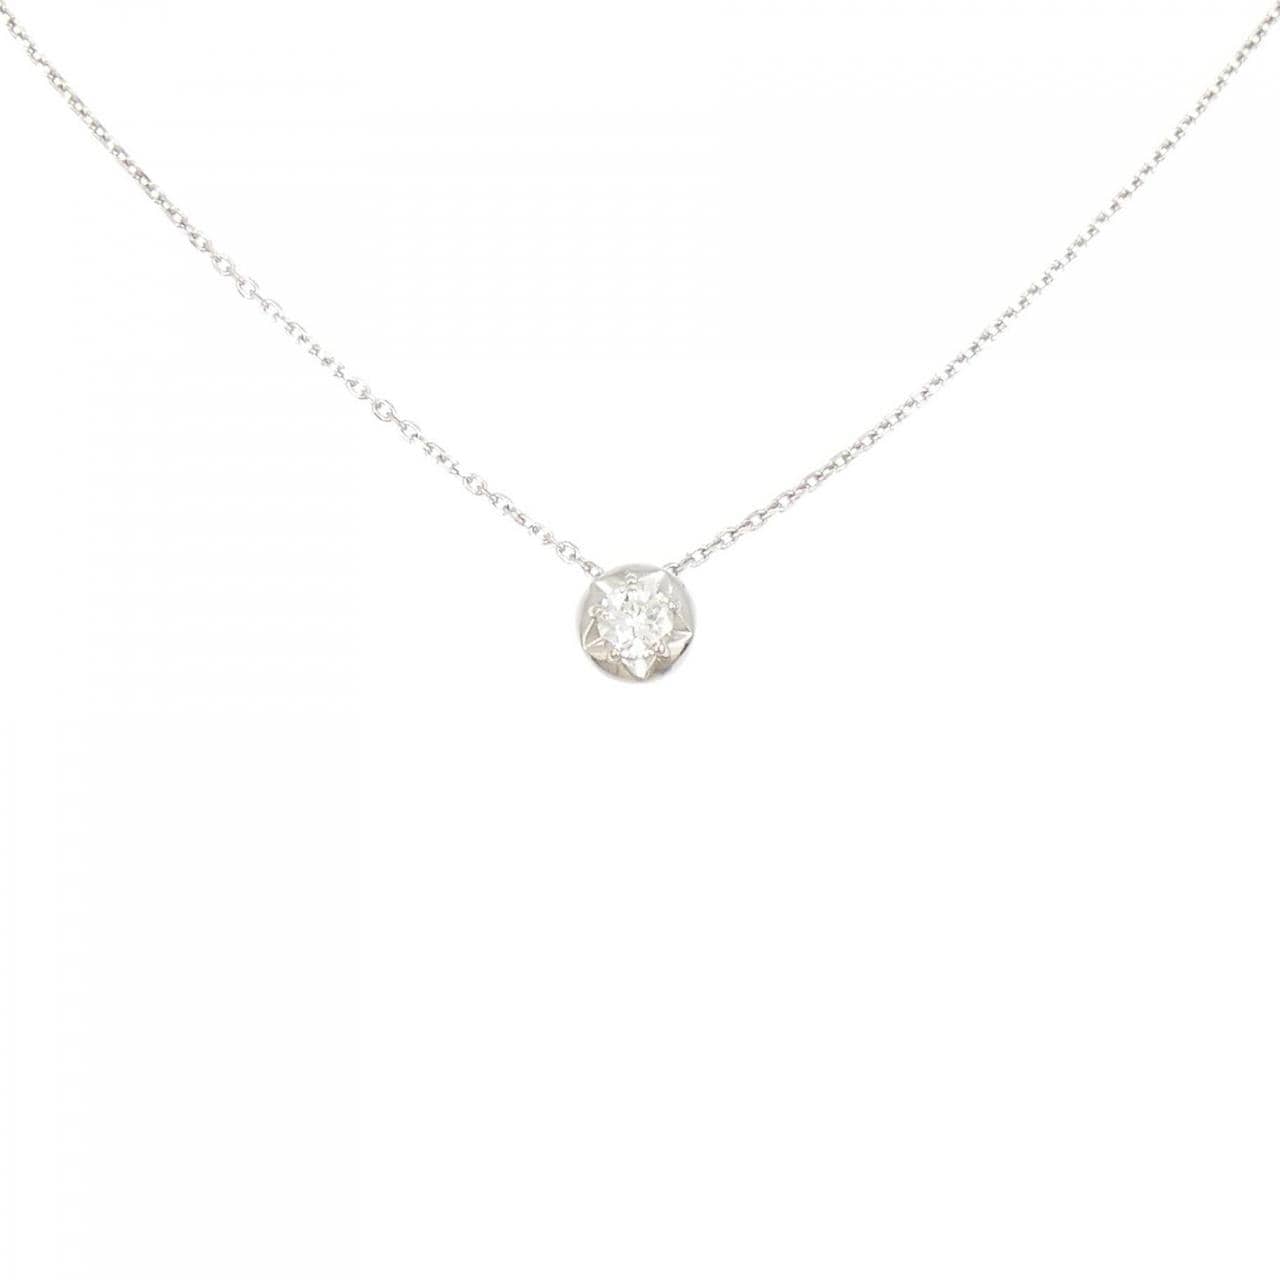 K18WG star Diamond necklace 0.119CT